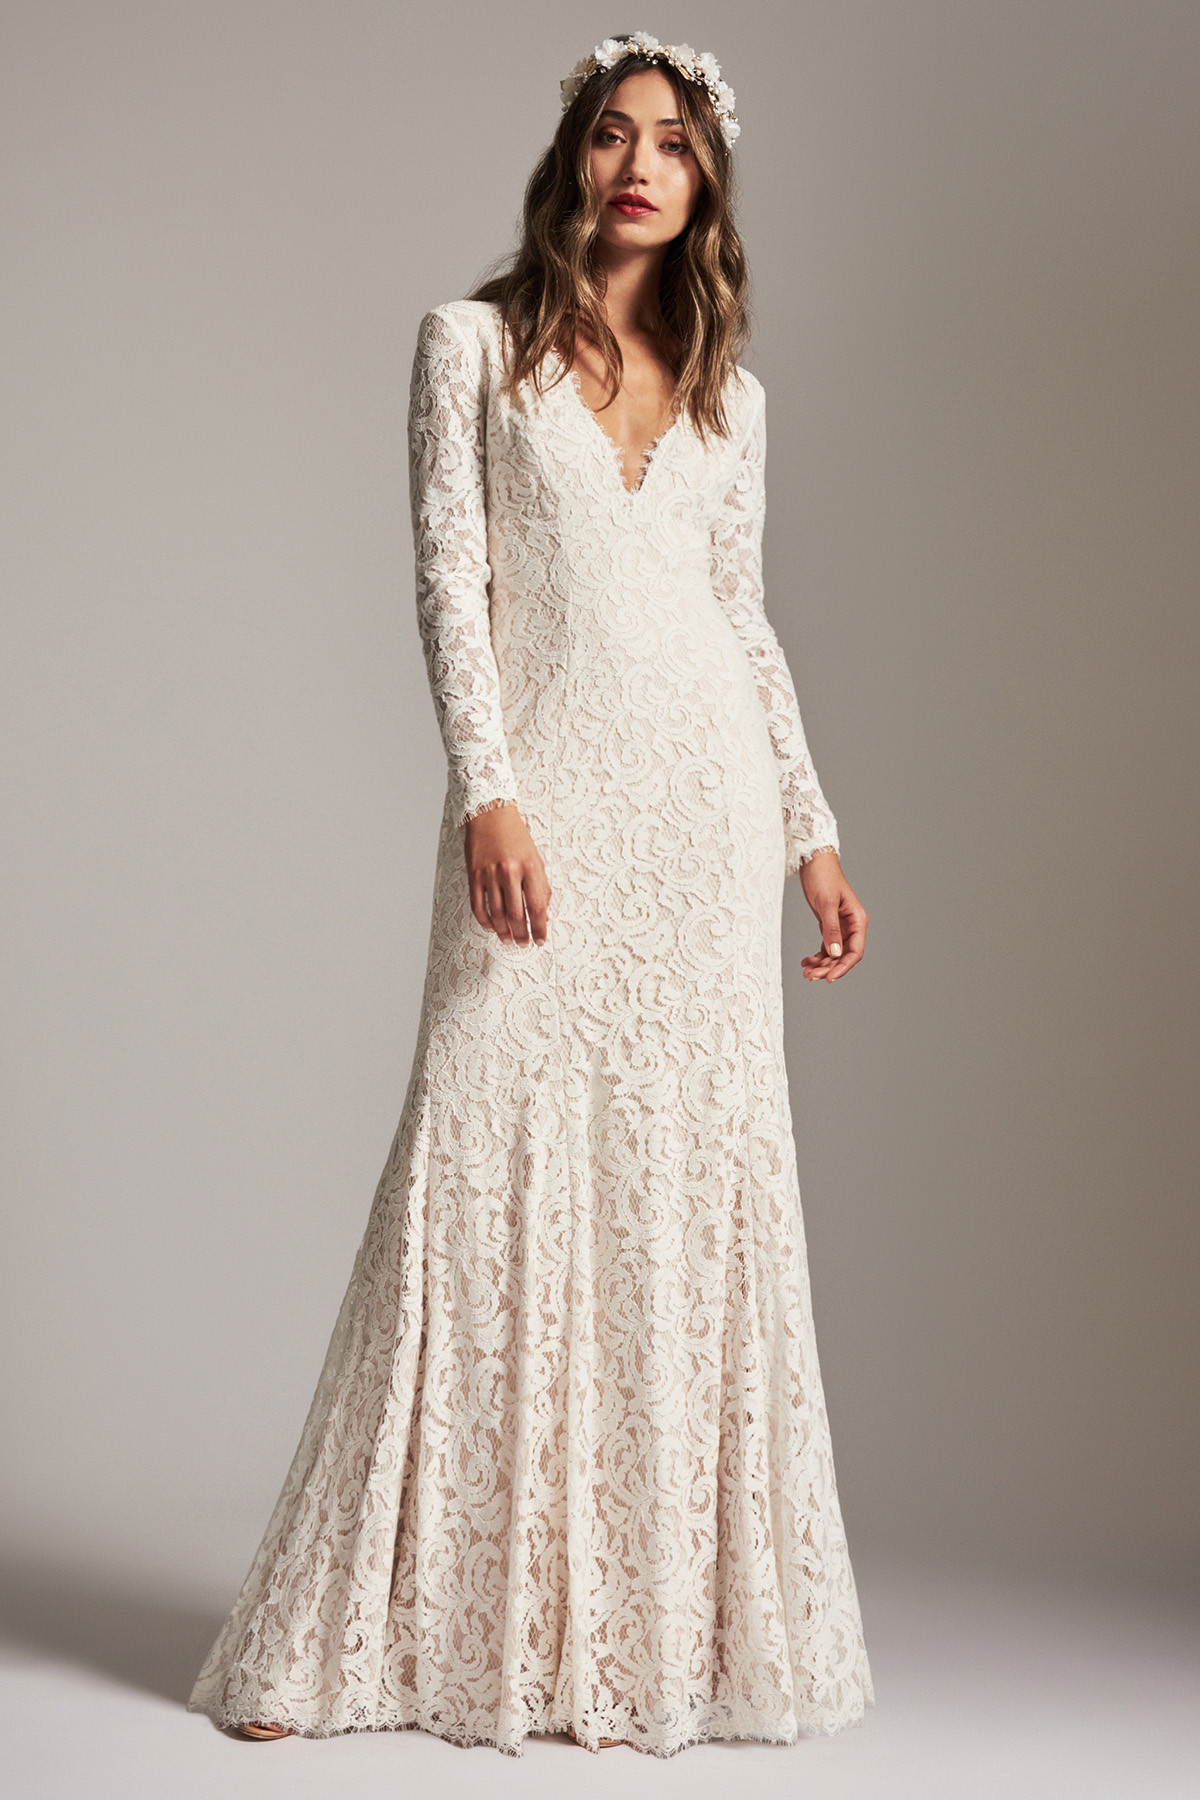 Wedding Dresses Under 500 | Affordable Wedding Gowns - UCenter Dress